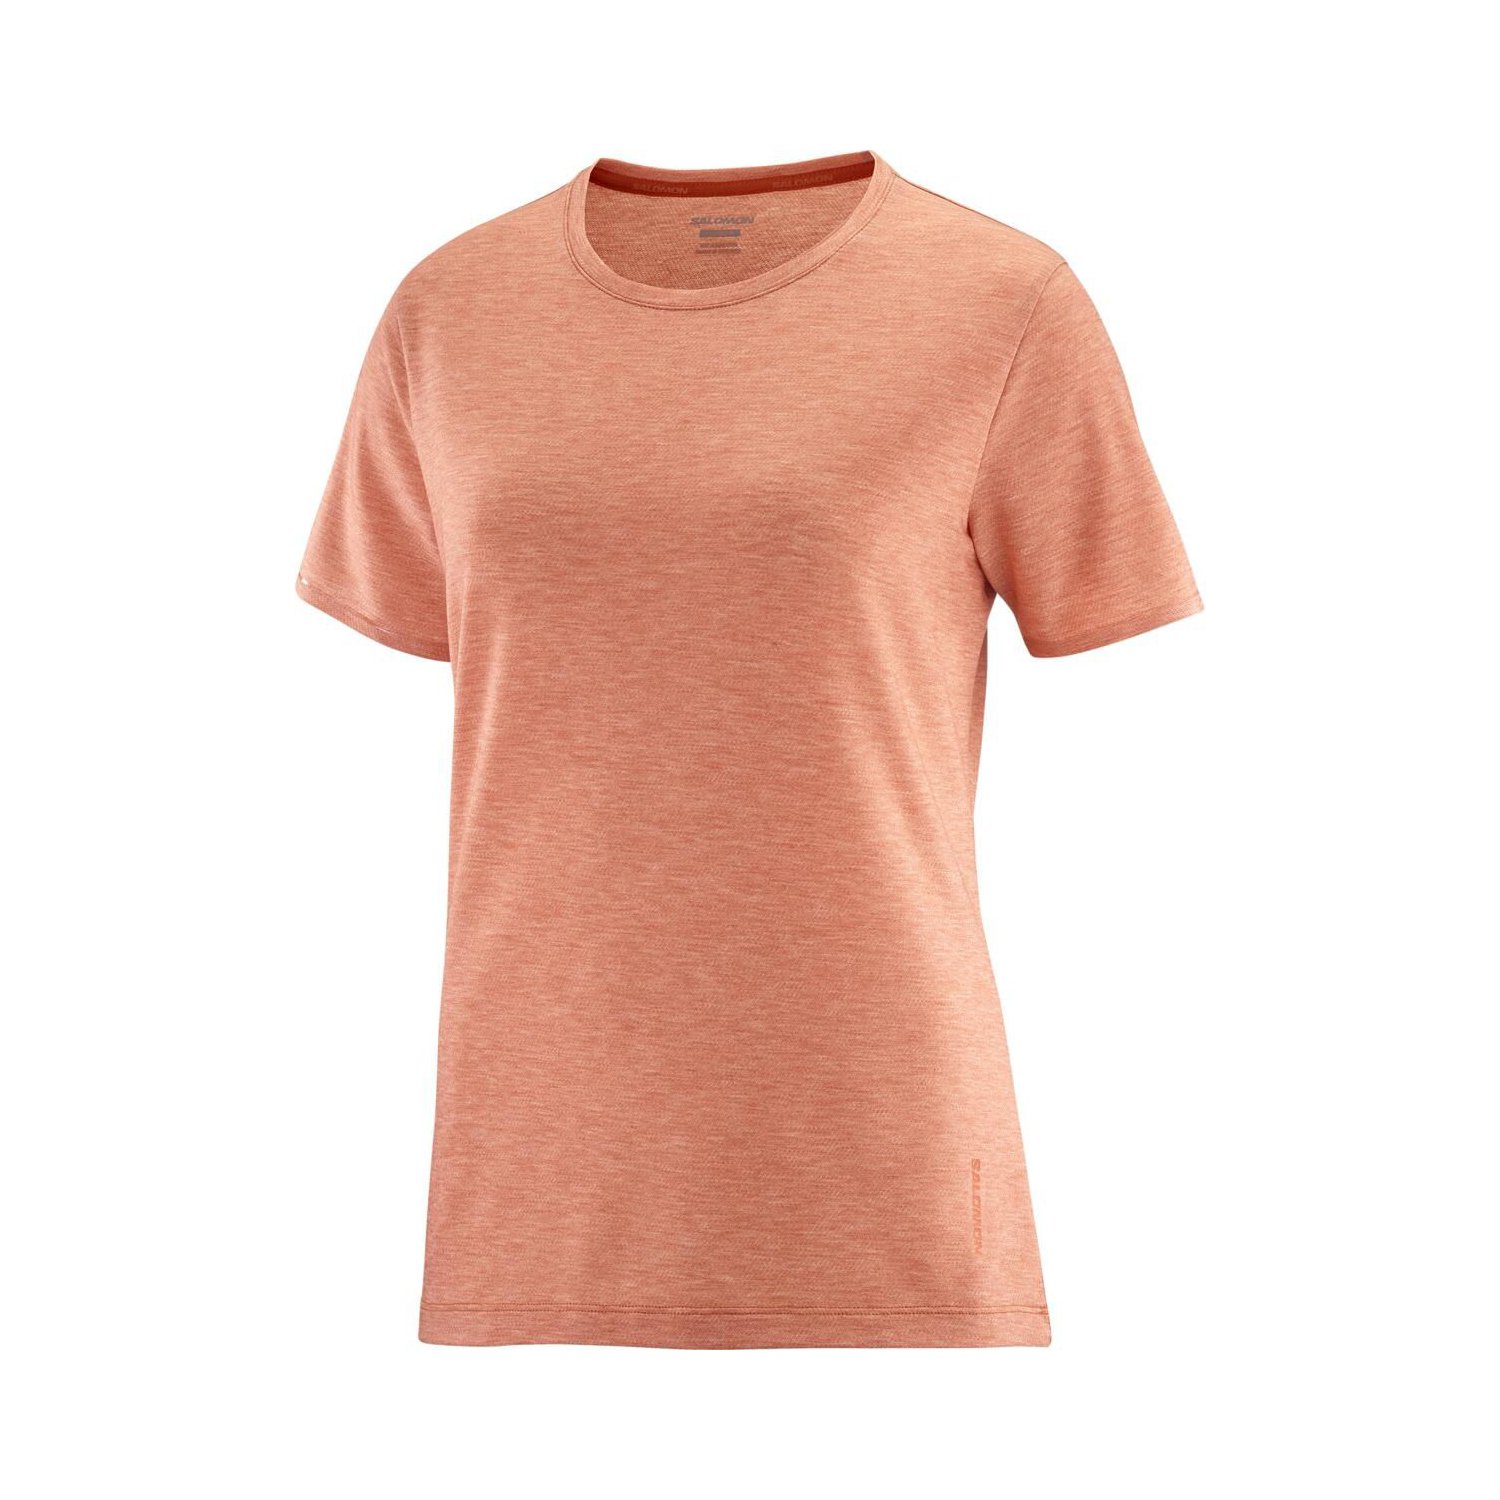 Salomon Sntial TencelSS Kadın Outdoor Koşu Tişört - Renkli - 1